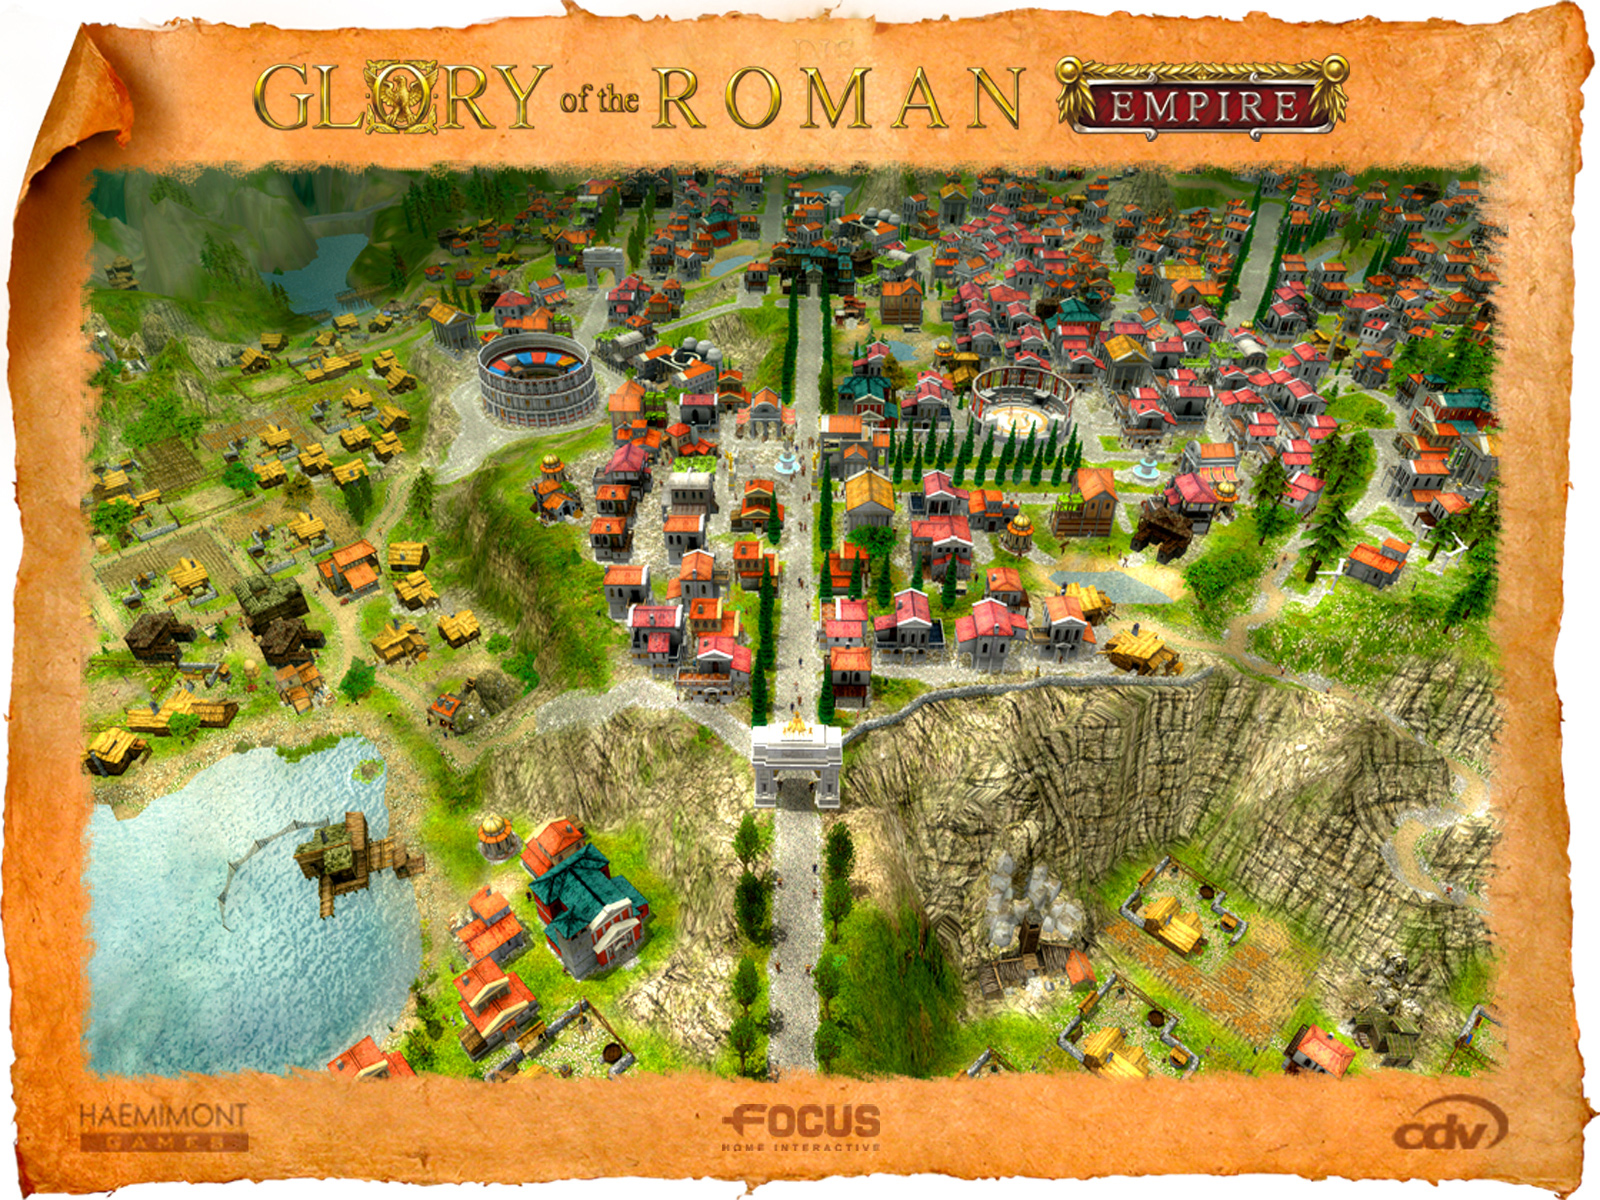 Glory_of_the_Roman_Empire_02_1600x1200.jpg